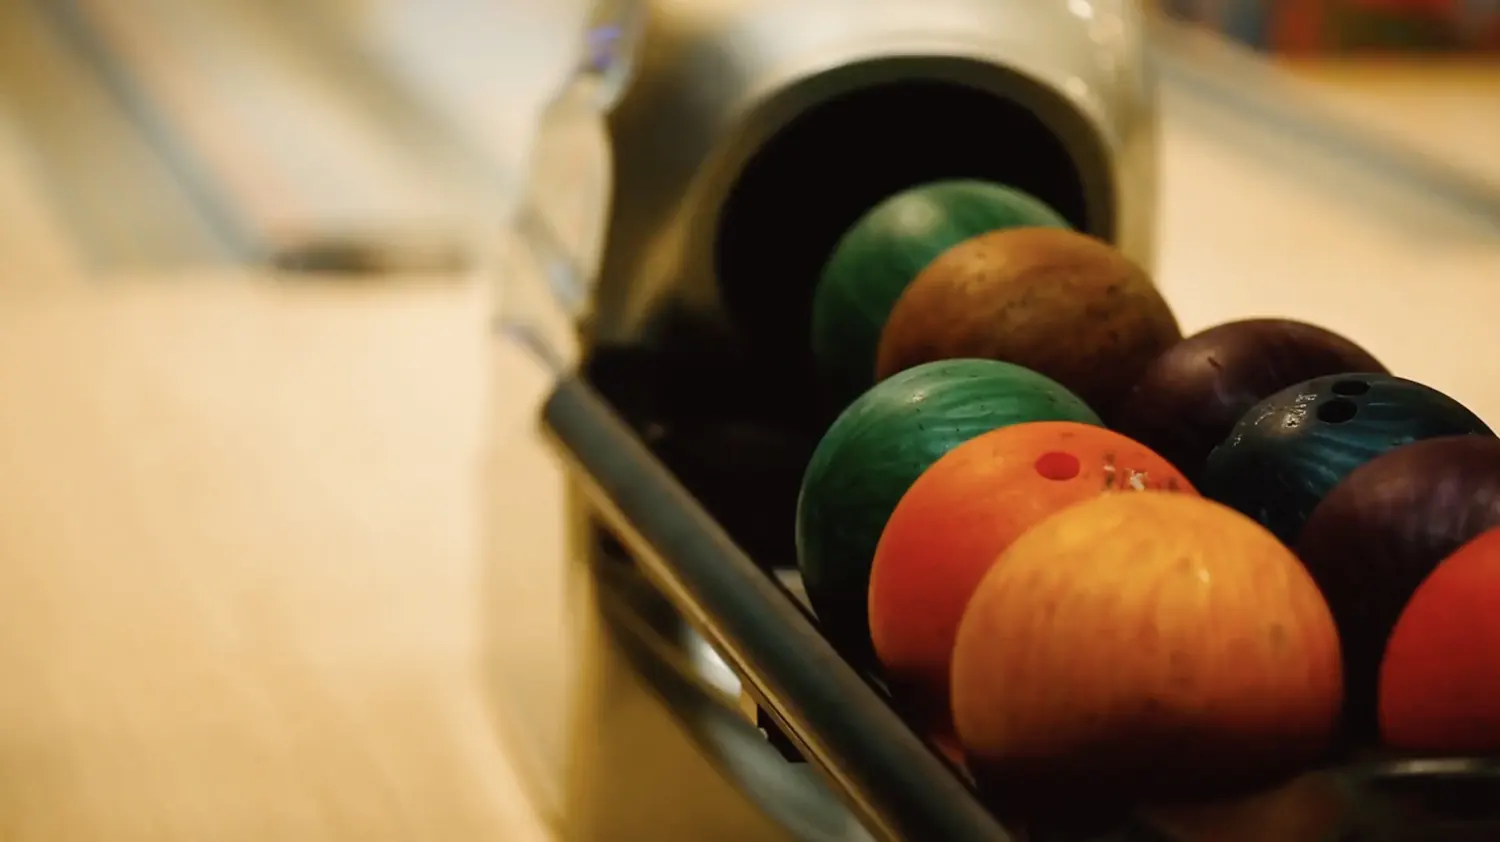 Multicolored Bowling Balls